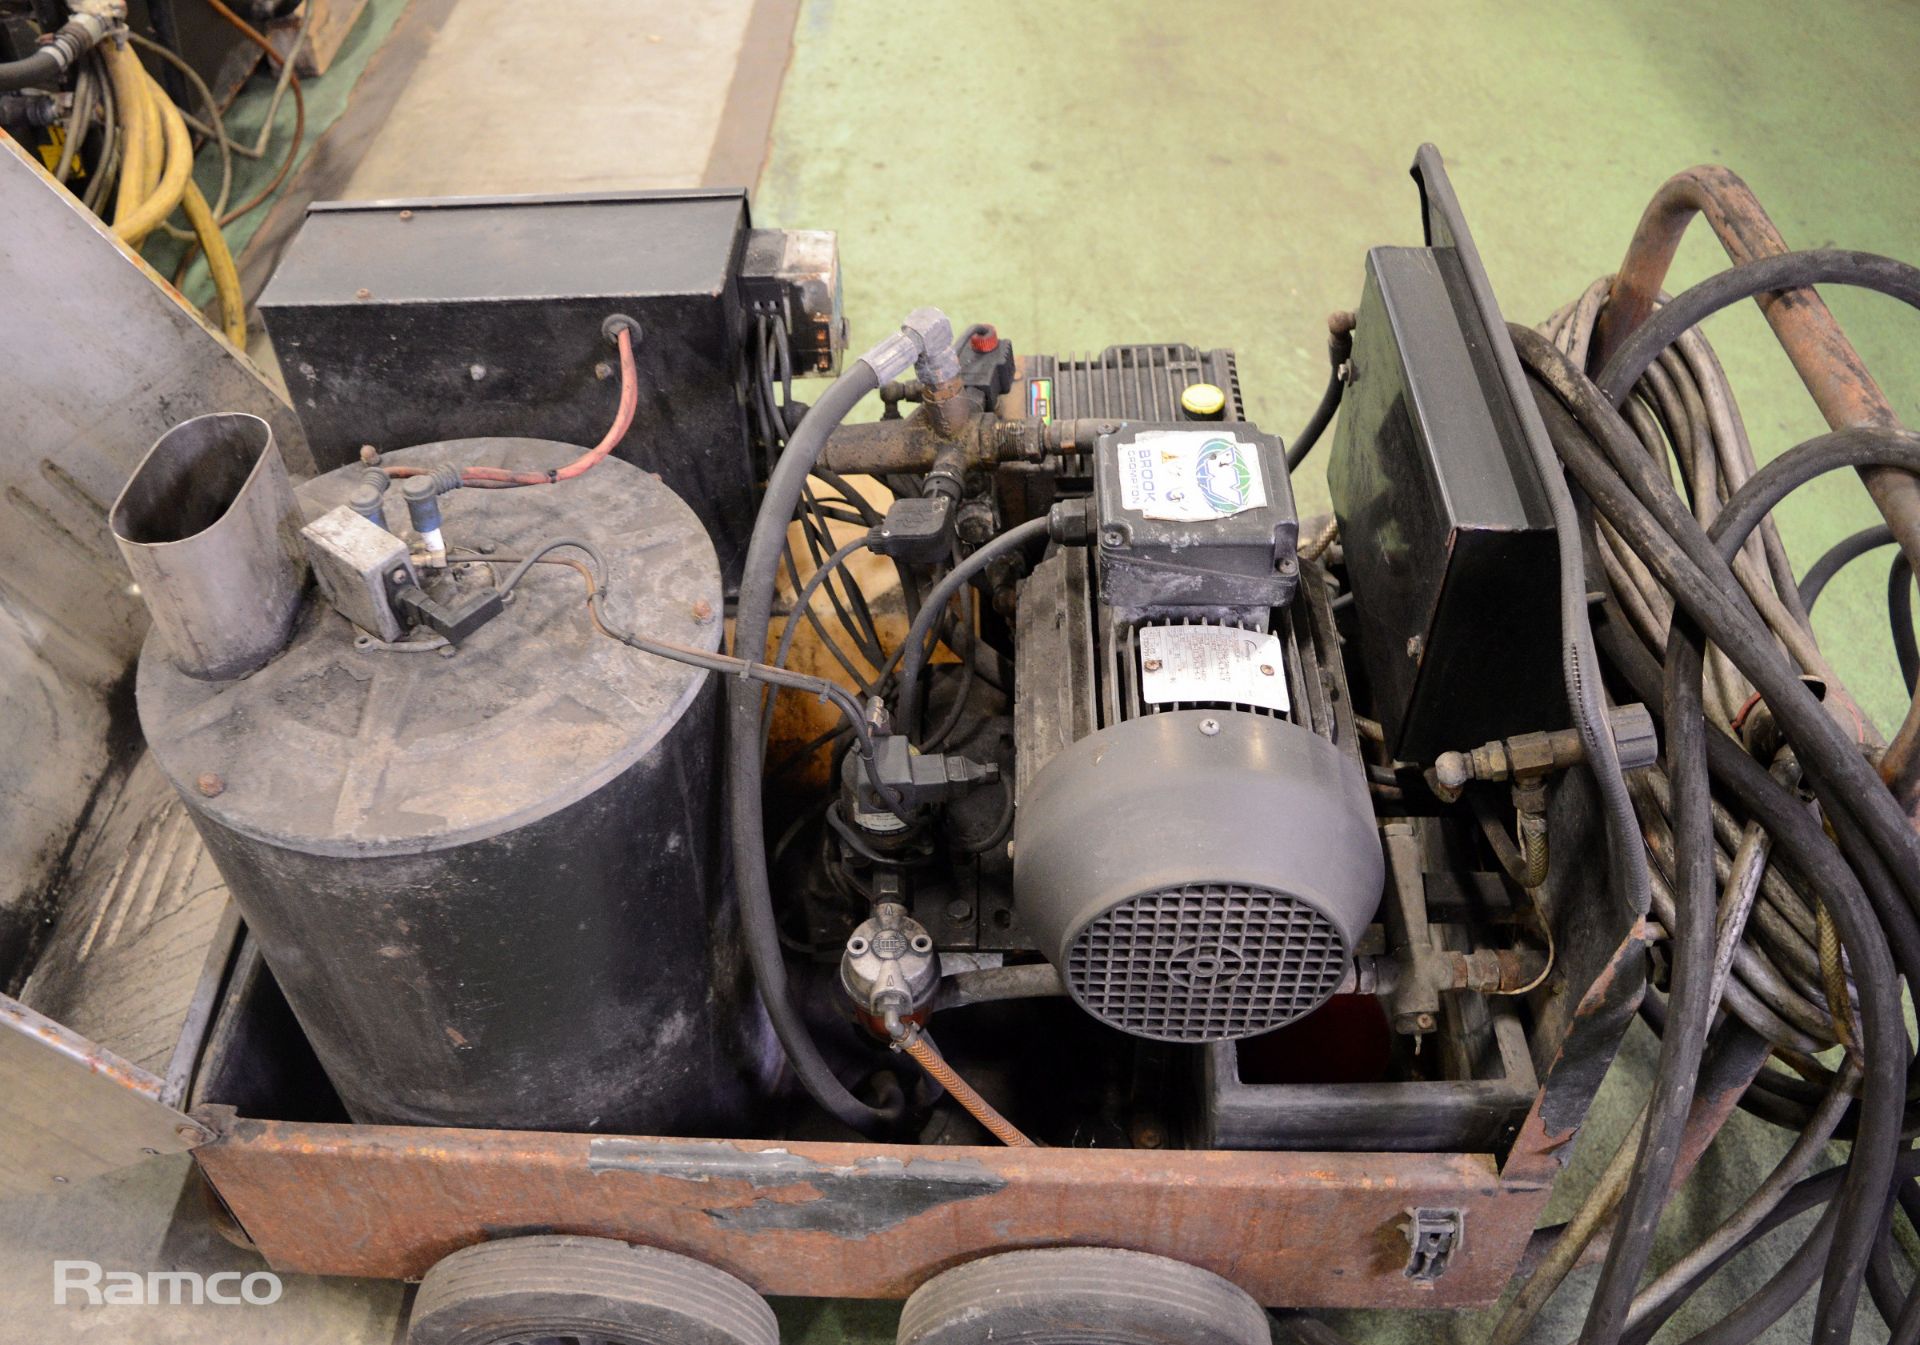 Quill Cougar MK8 diesel pressure washer - 117x65x77cm - Image 6 of 8